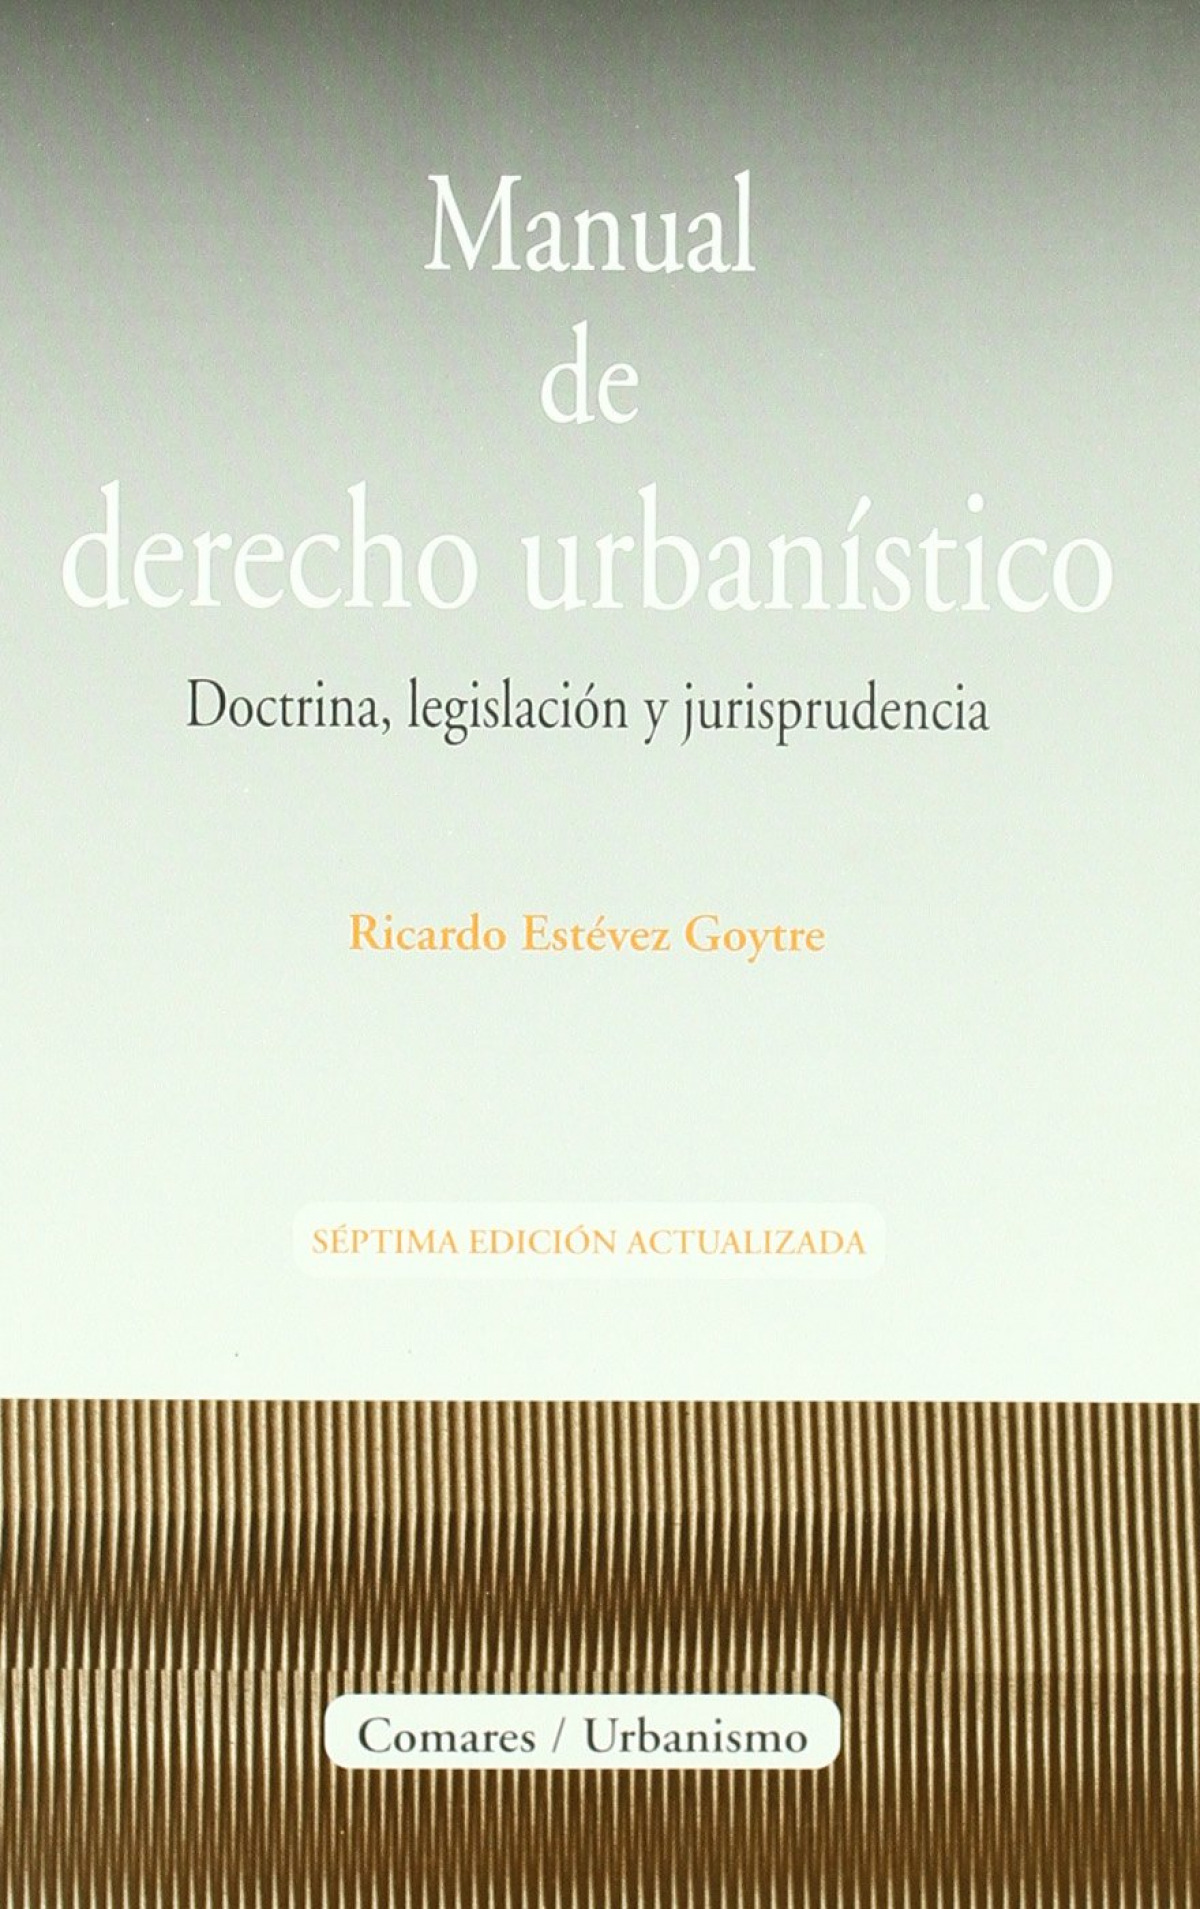 Manual de derecho urbanistico - Estévez Goytre, Ricardo